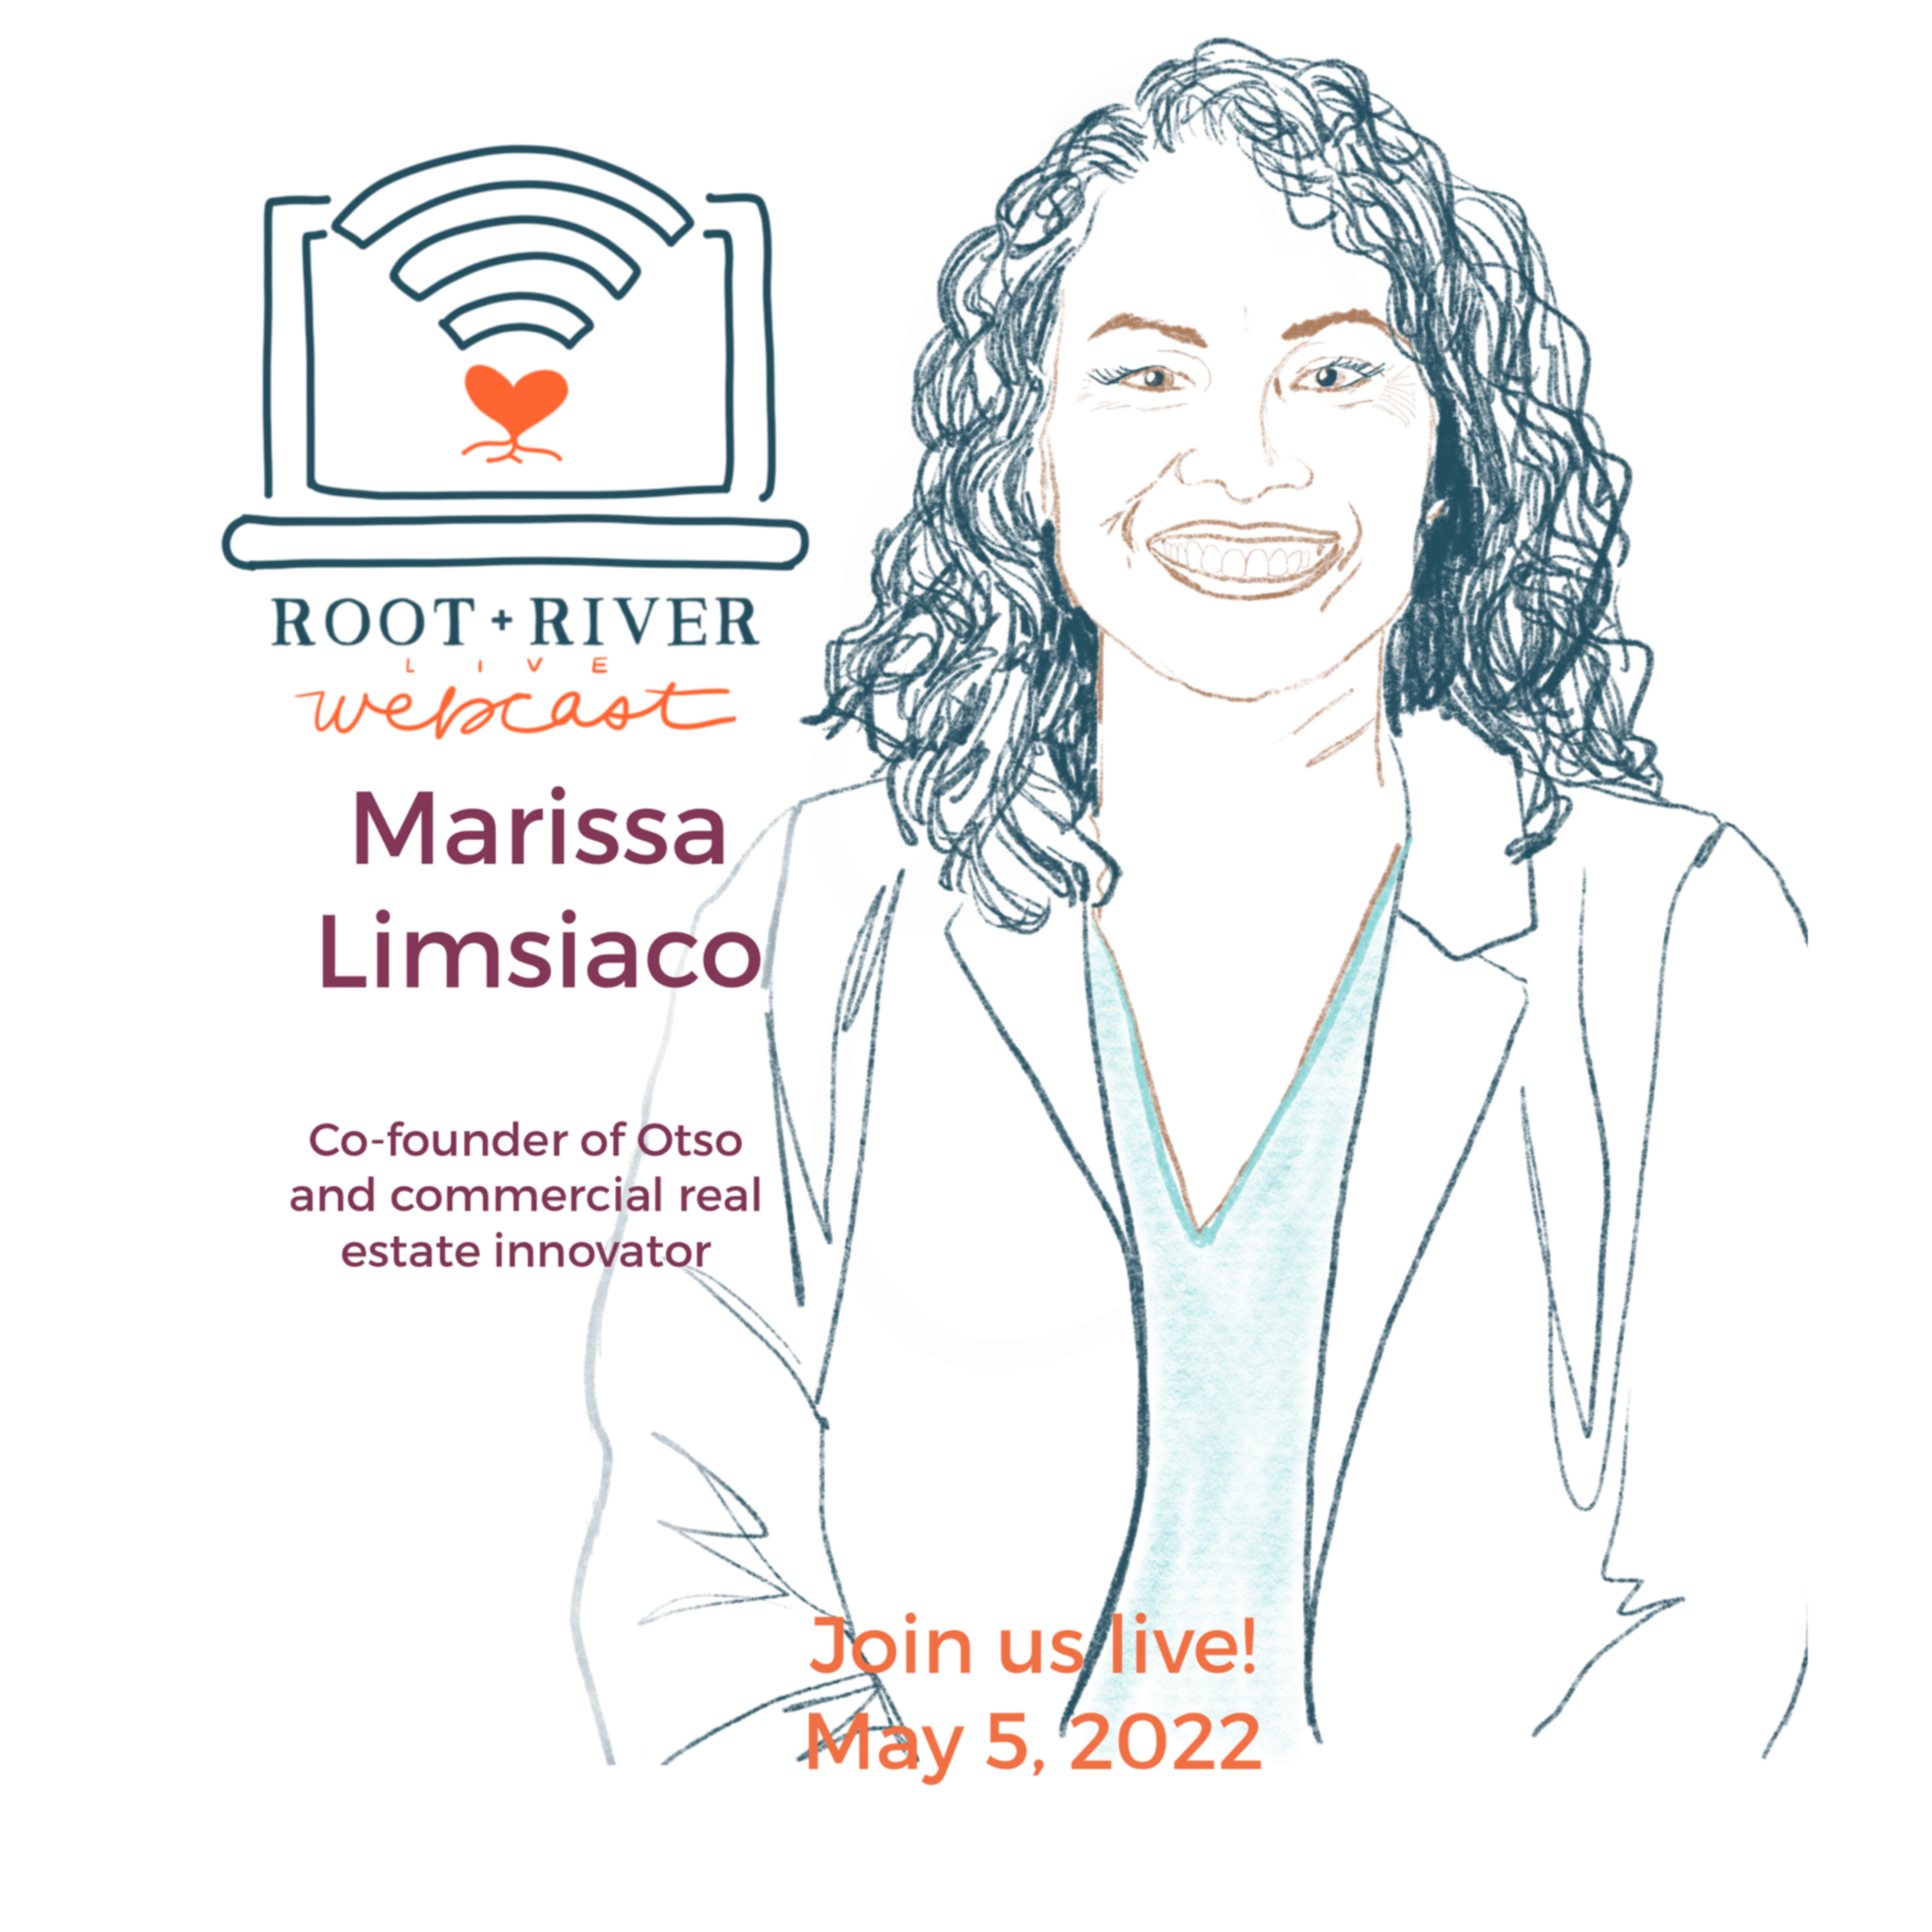 Root + River Webcast Marissa Limsiaco